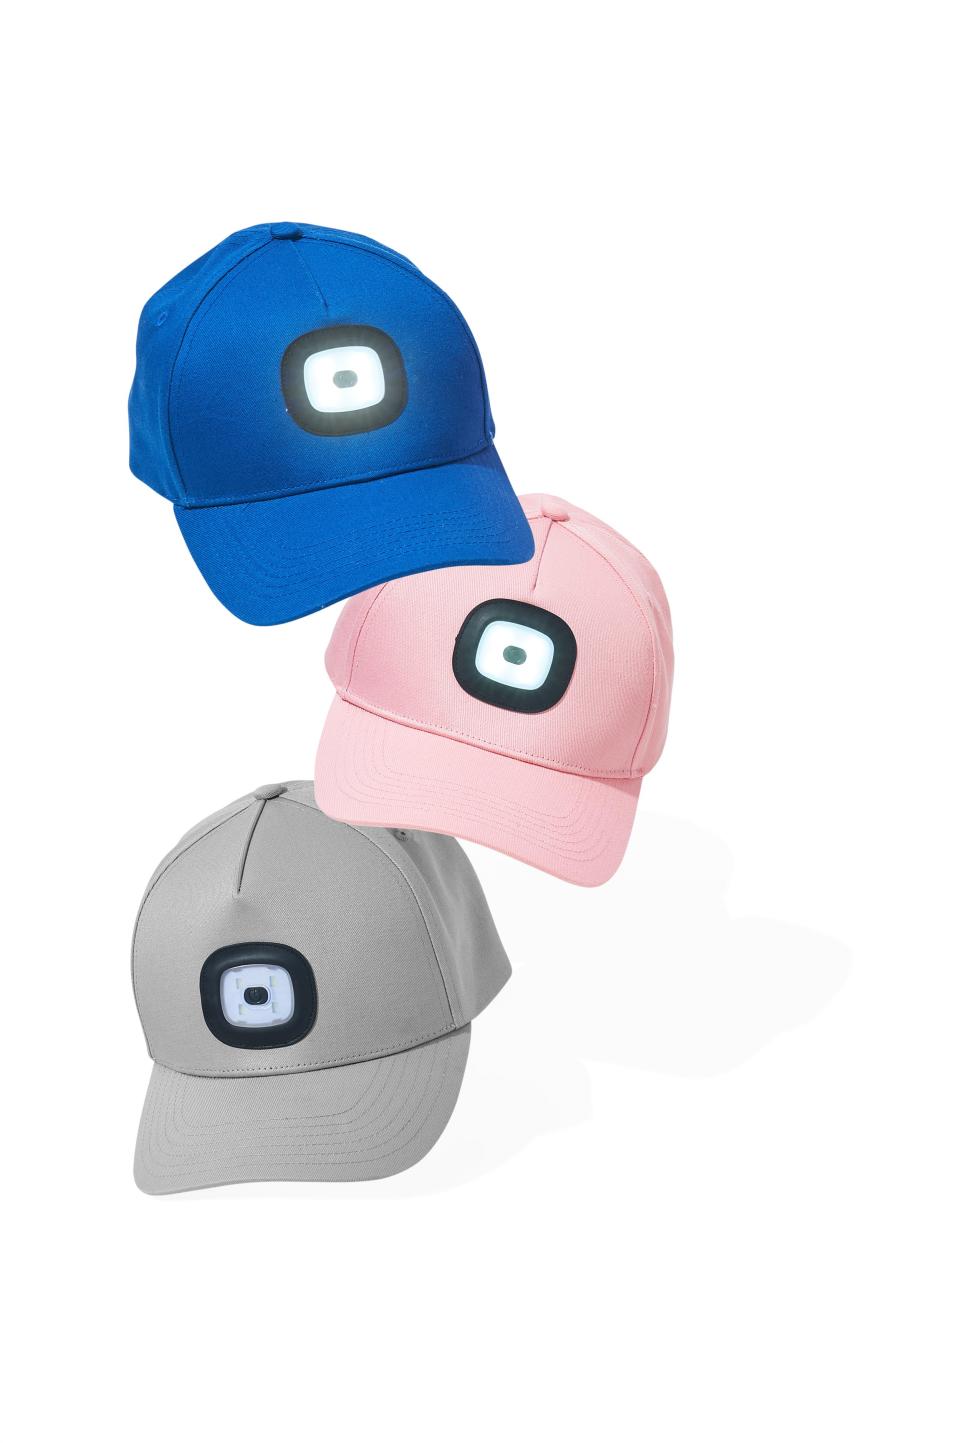 Headlightz LED baseball cap